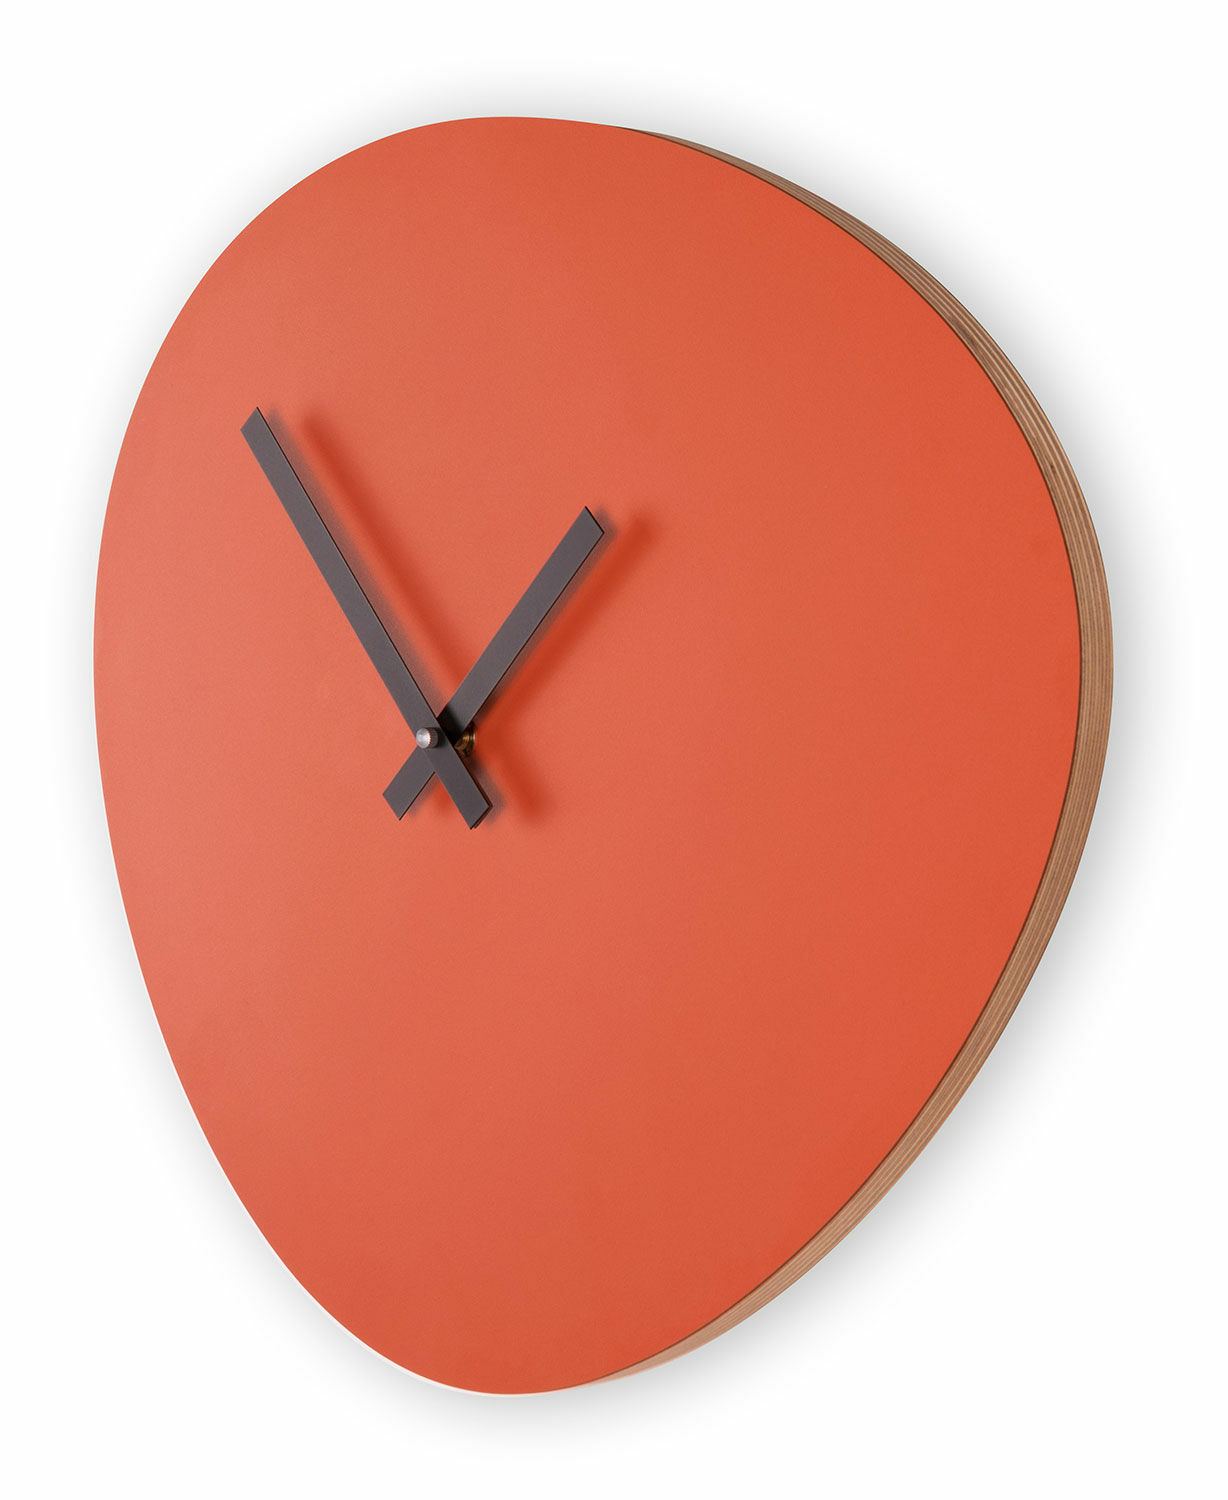 Wall clock "Pebble", orange version by KLOQ